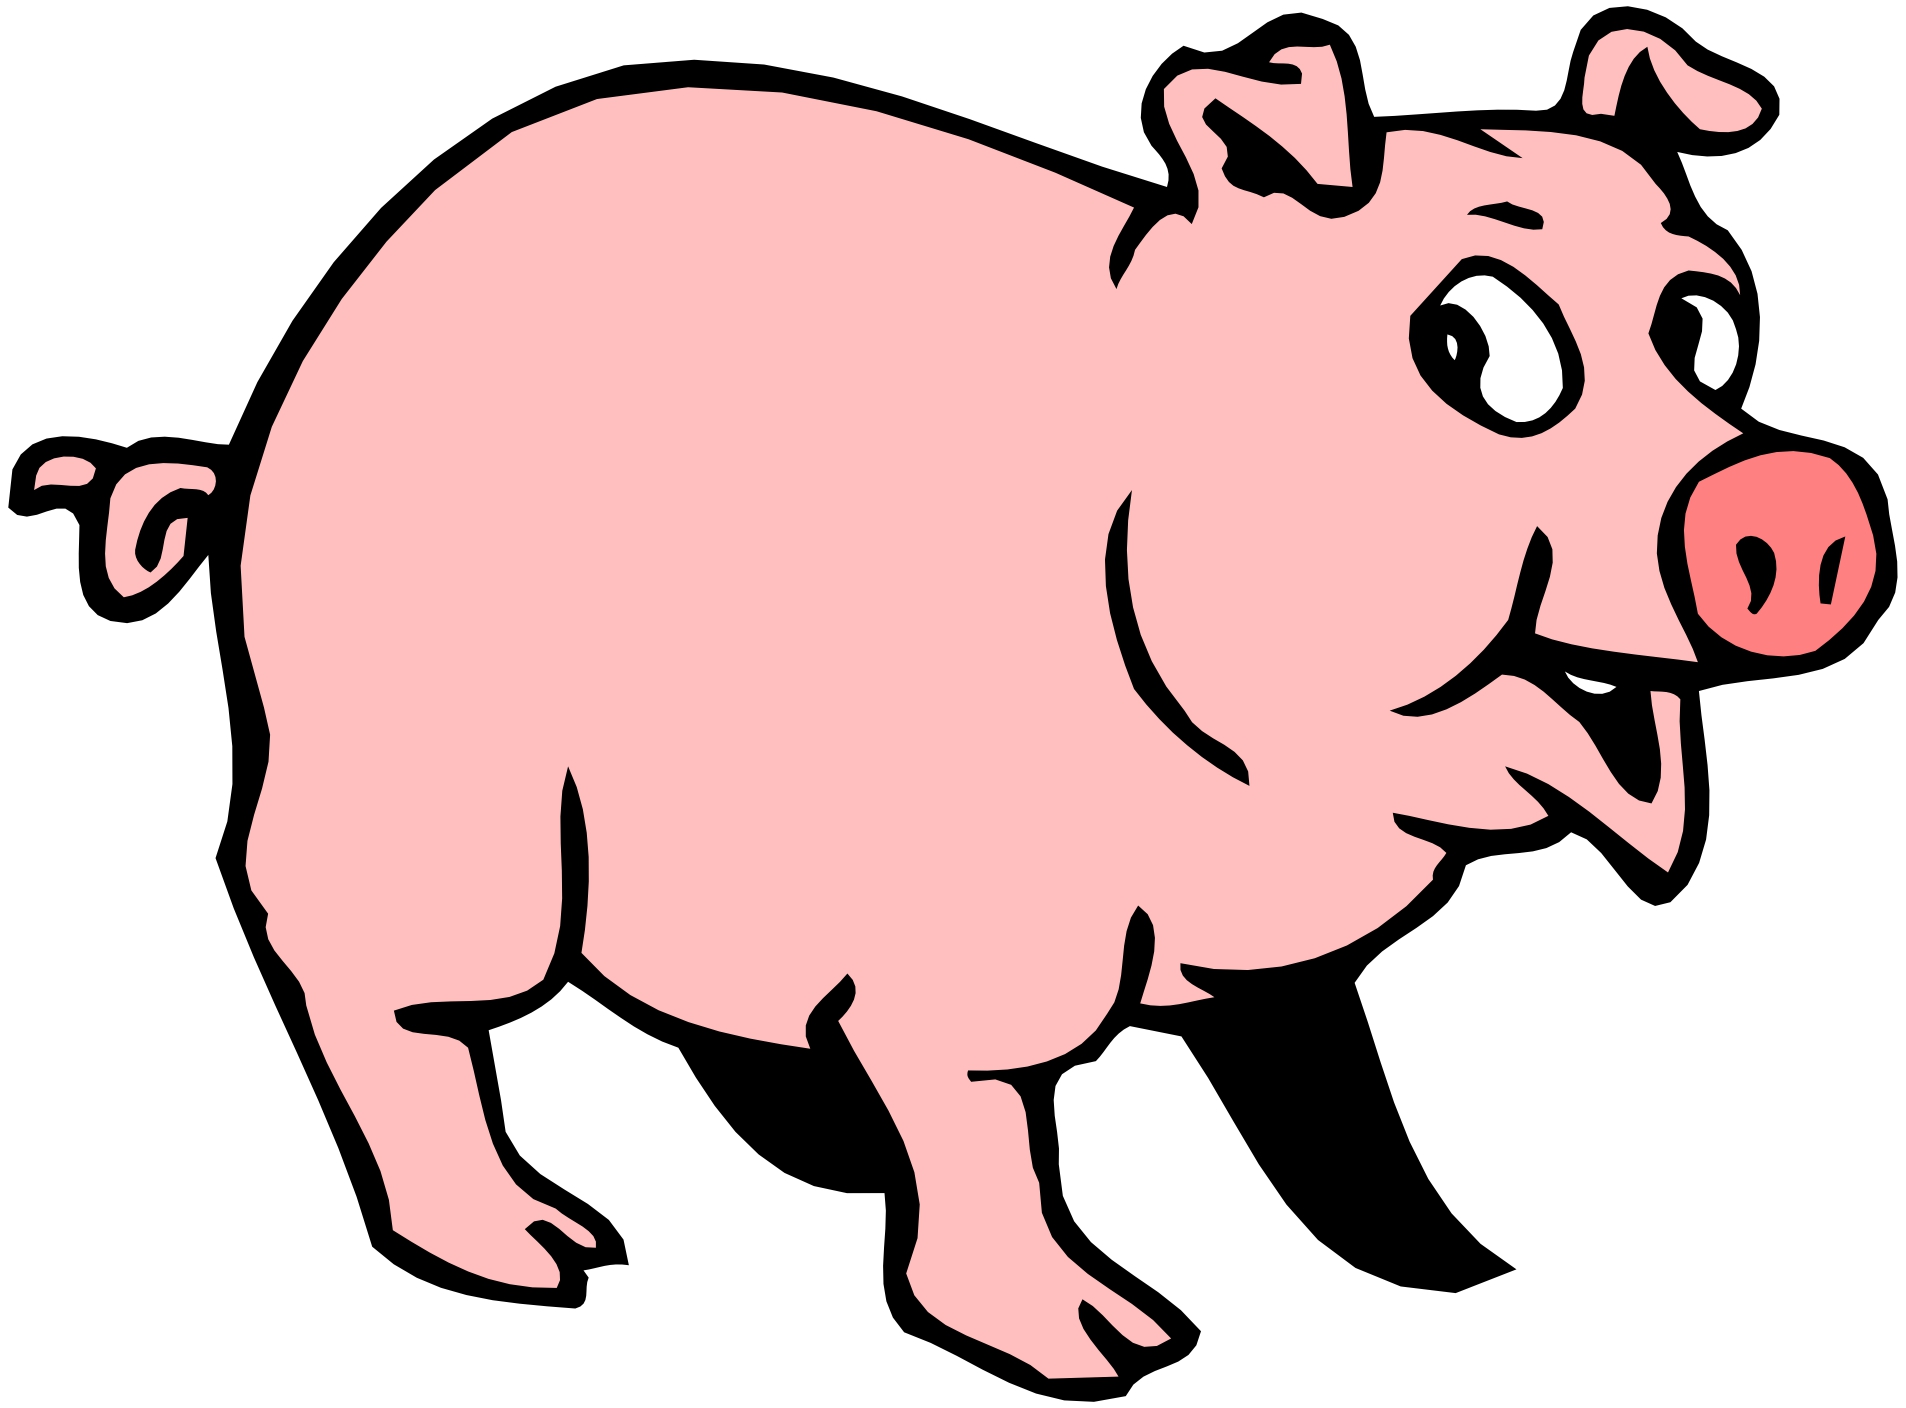 Pig Cartoons Images - ClipArt Best